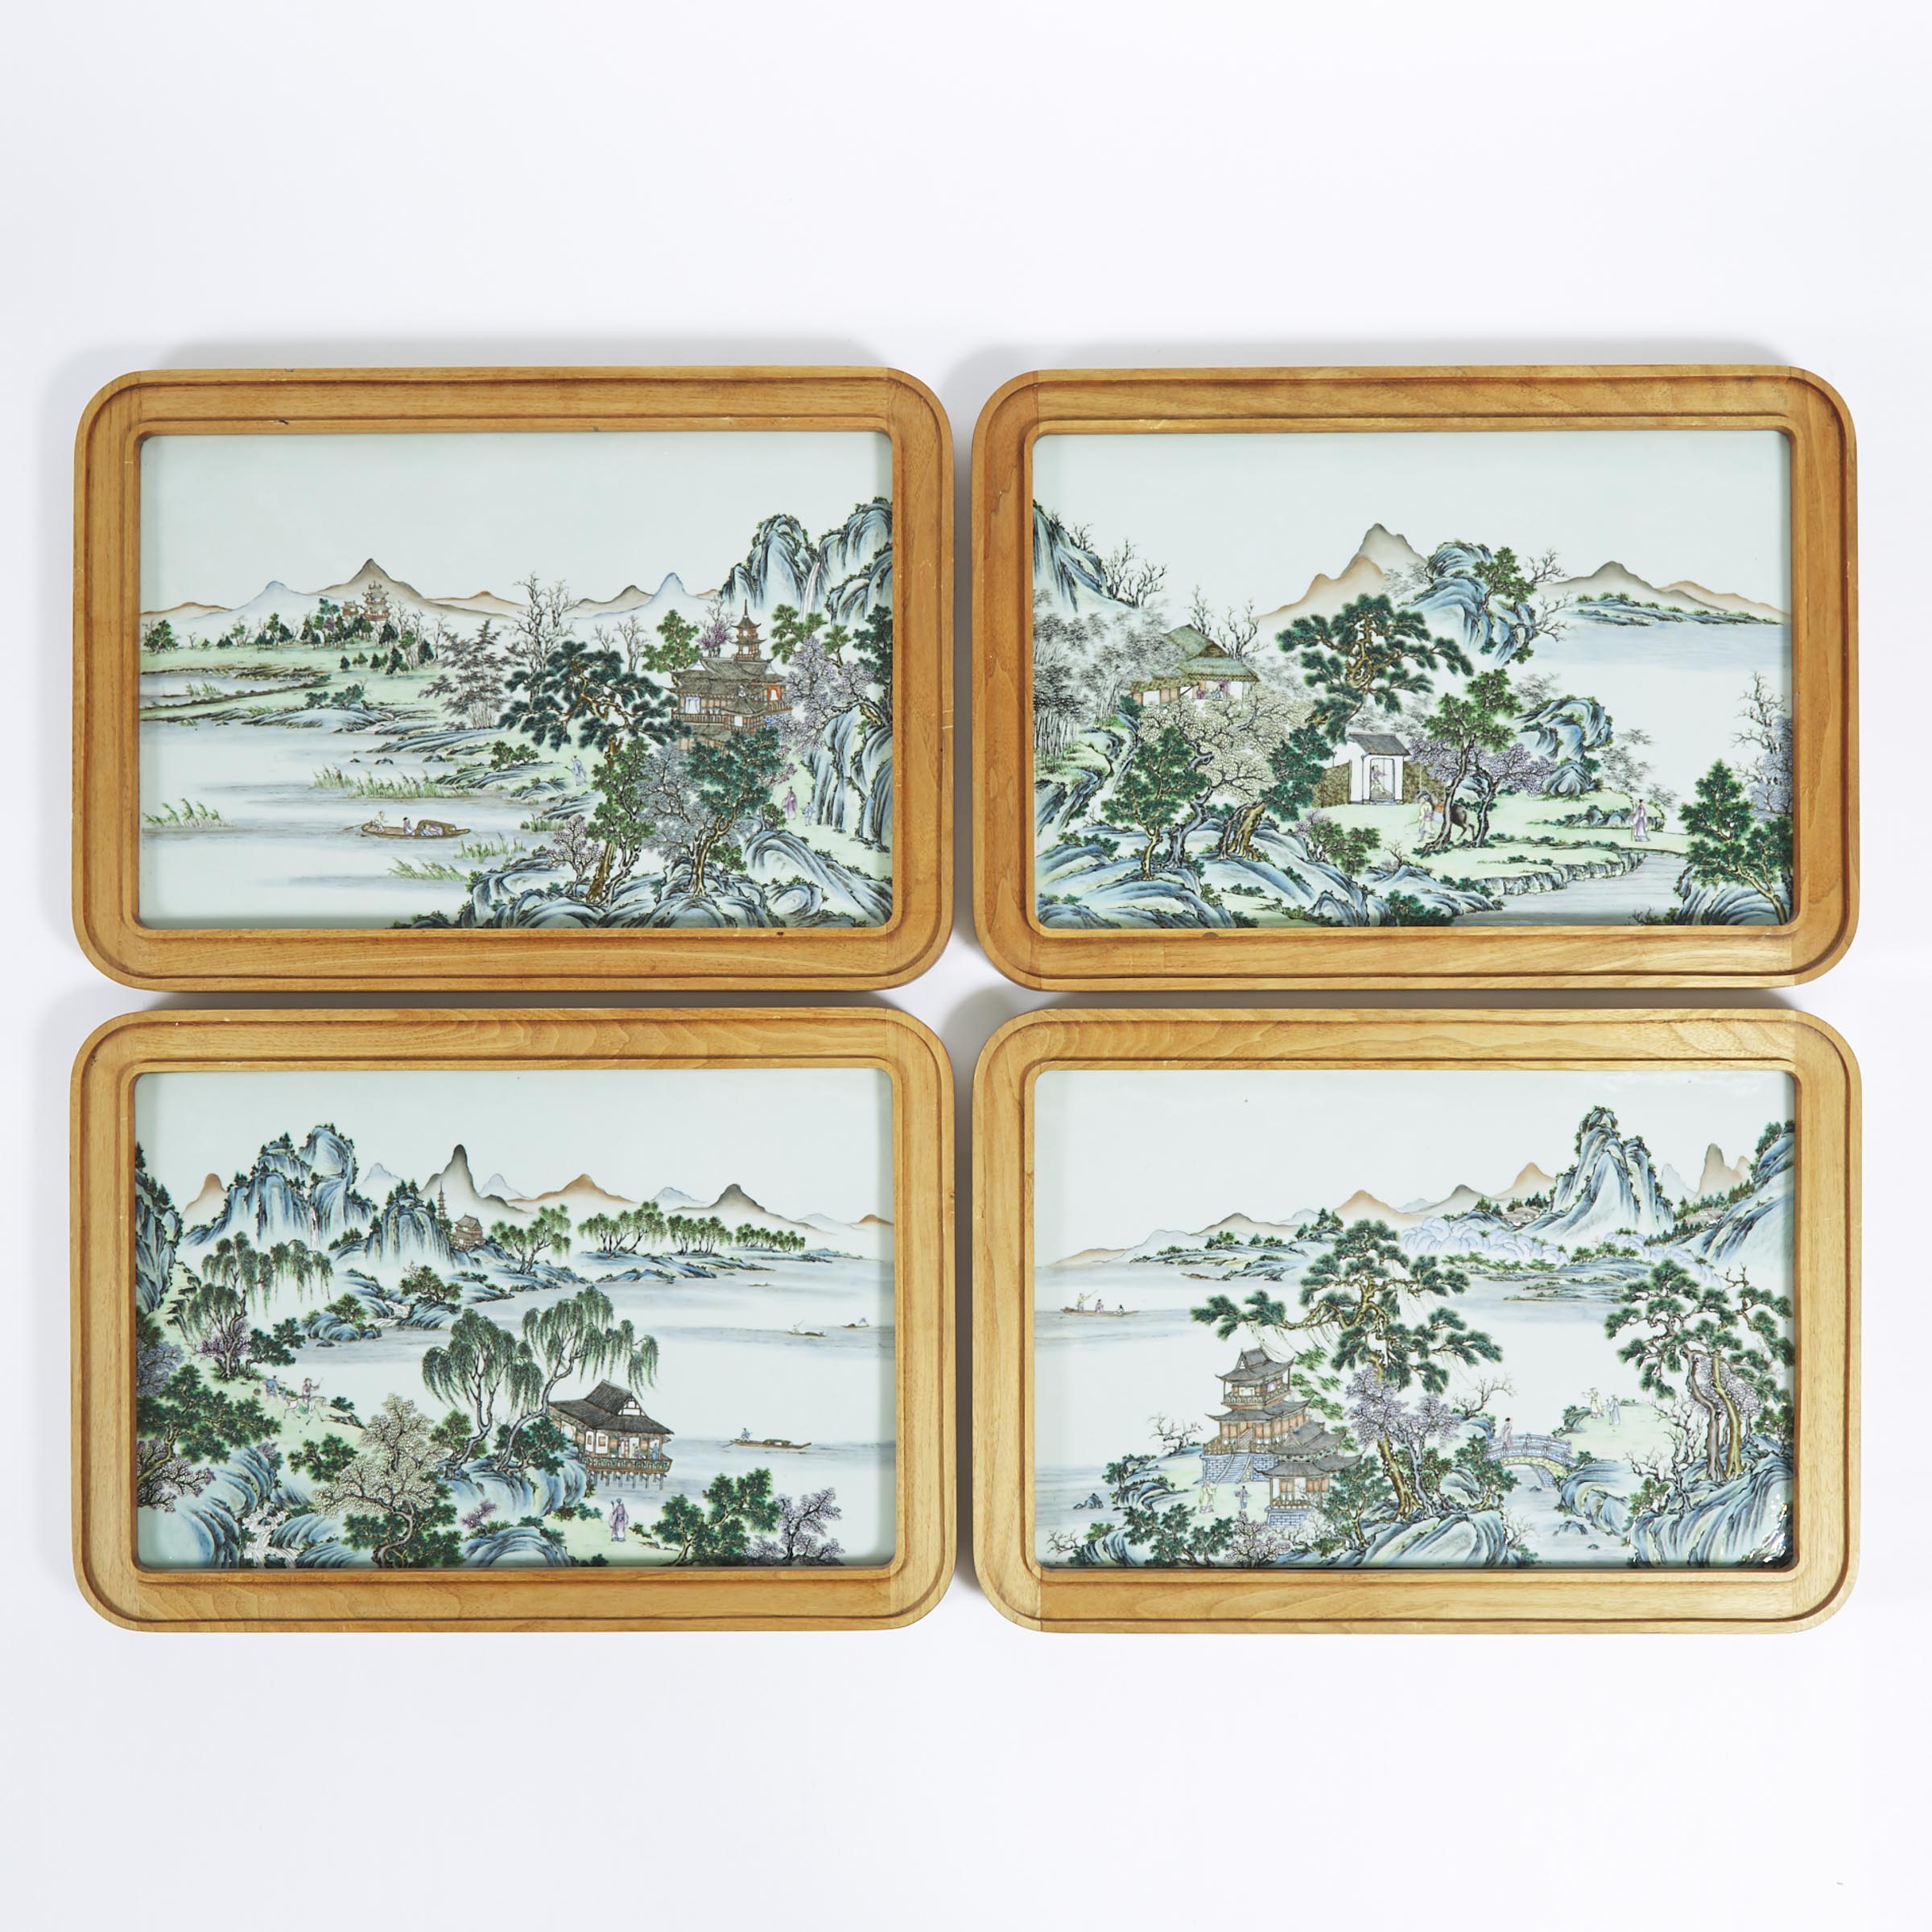 A Set of Four Famille Rose Porcelain 'Landscape' Panels, Late Qing/Republican Period